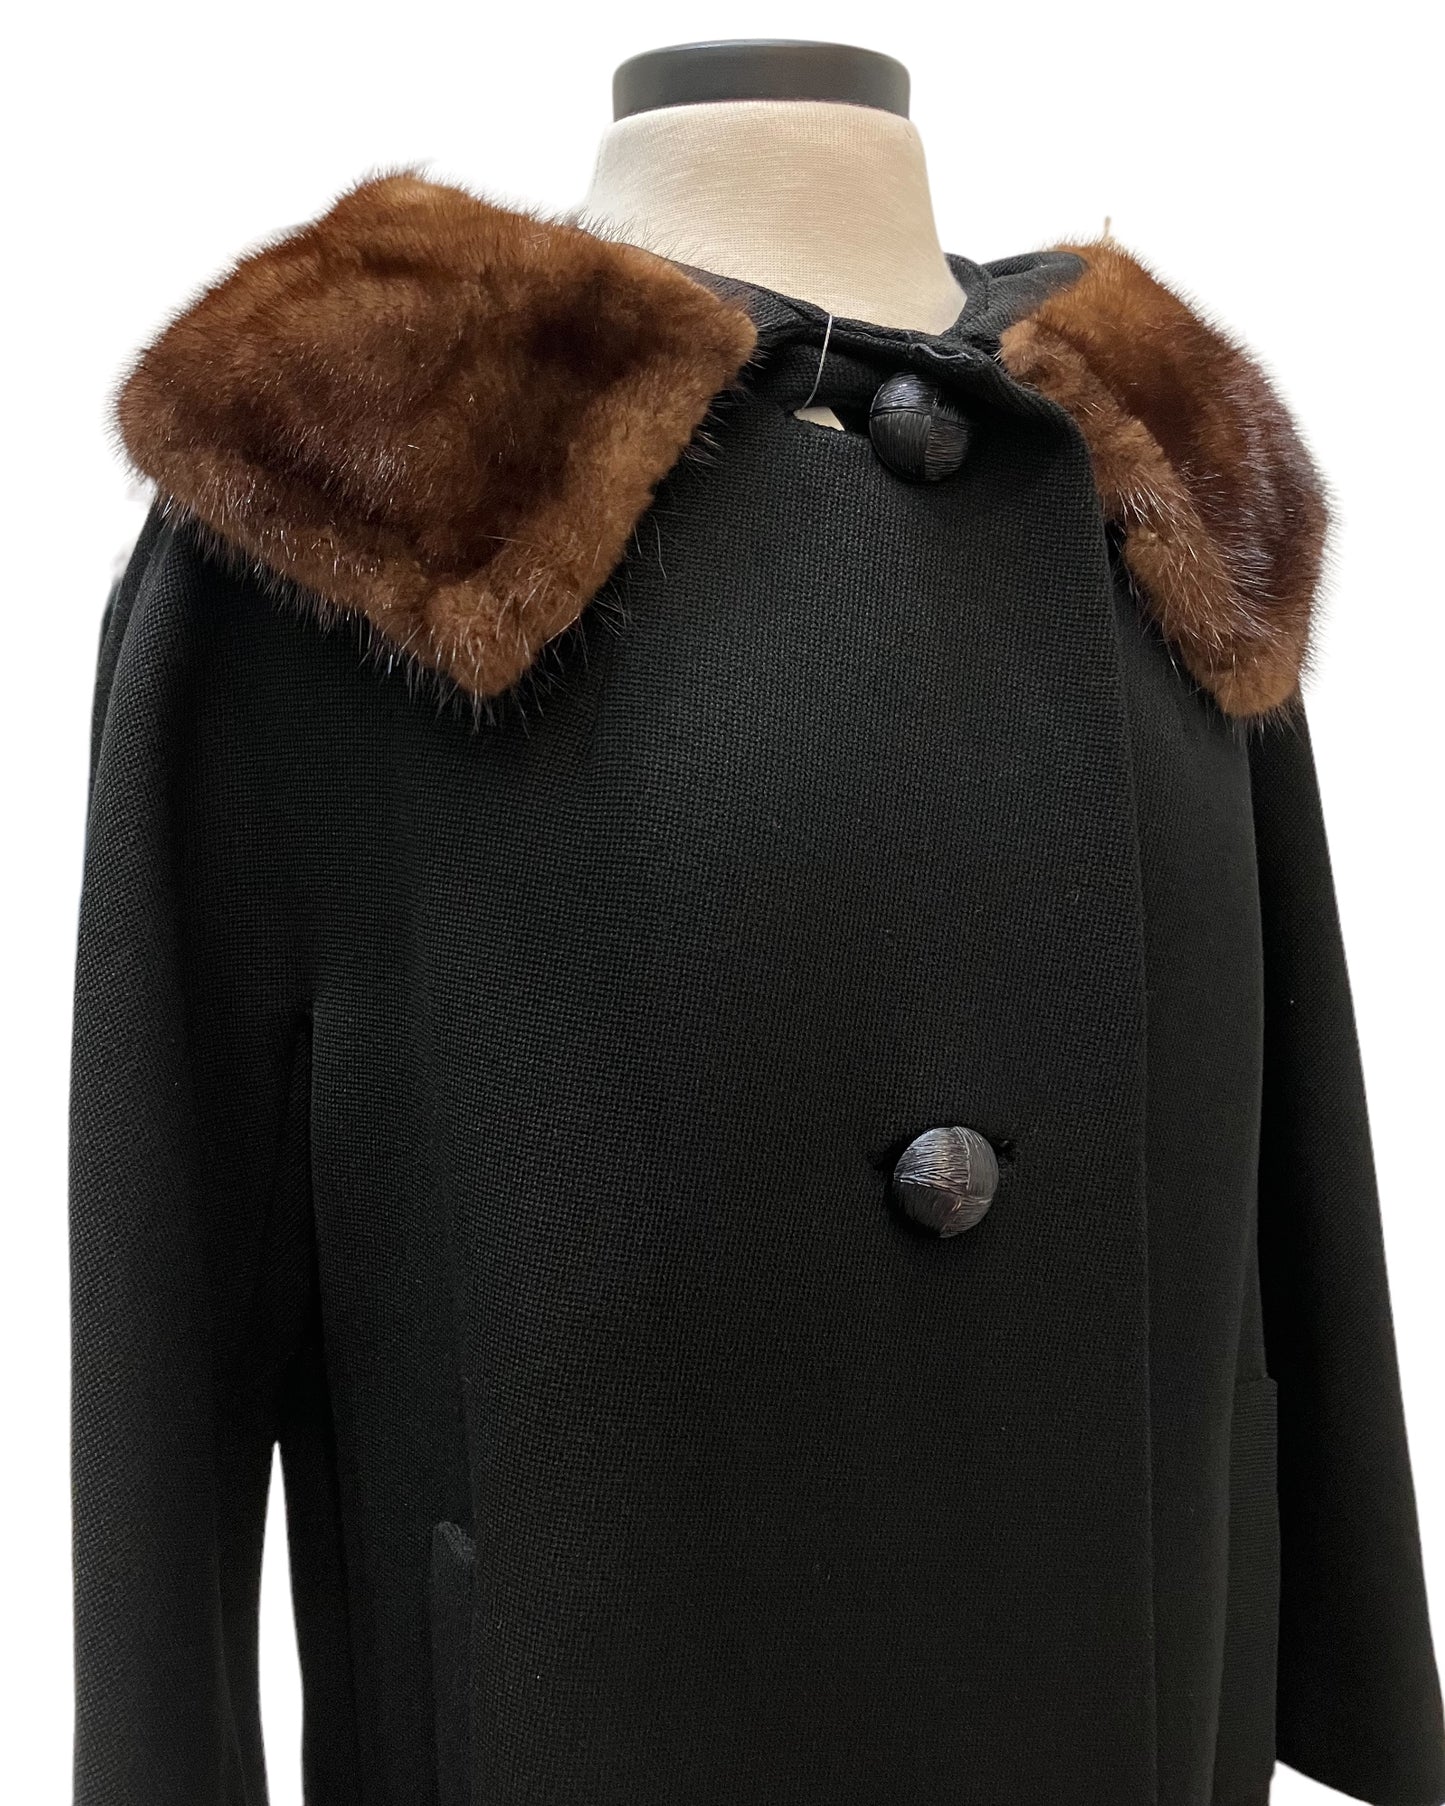 Vintage Rothmoor Coat With Fur Collar